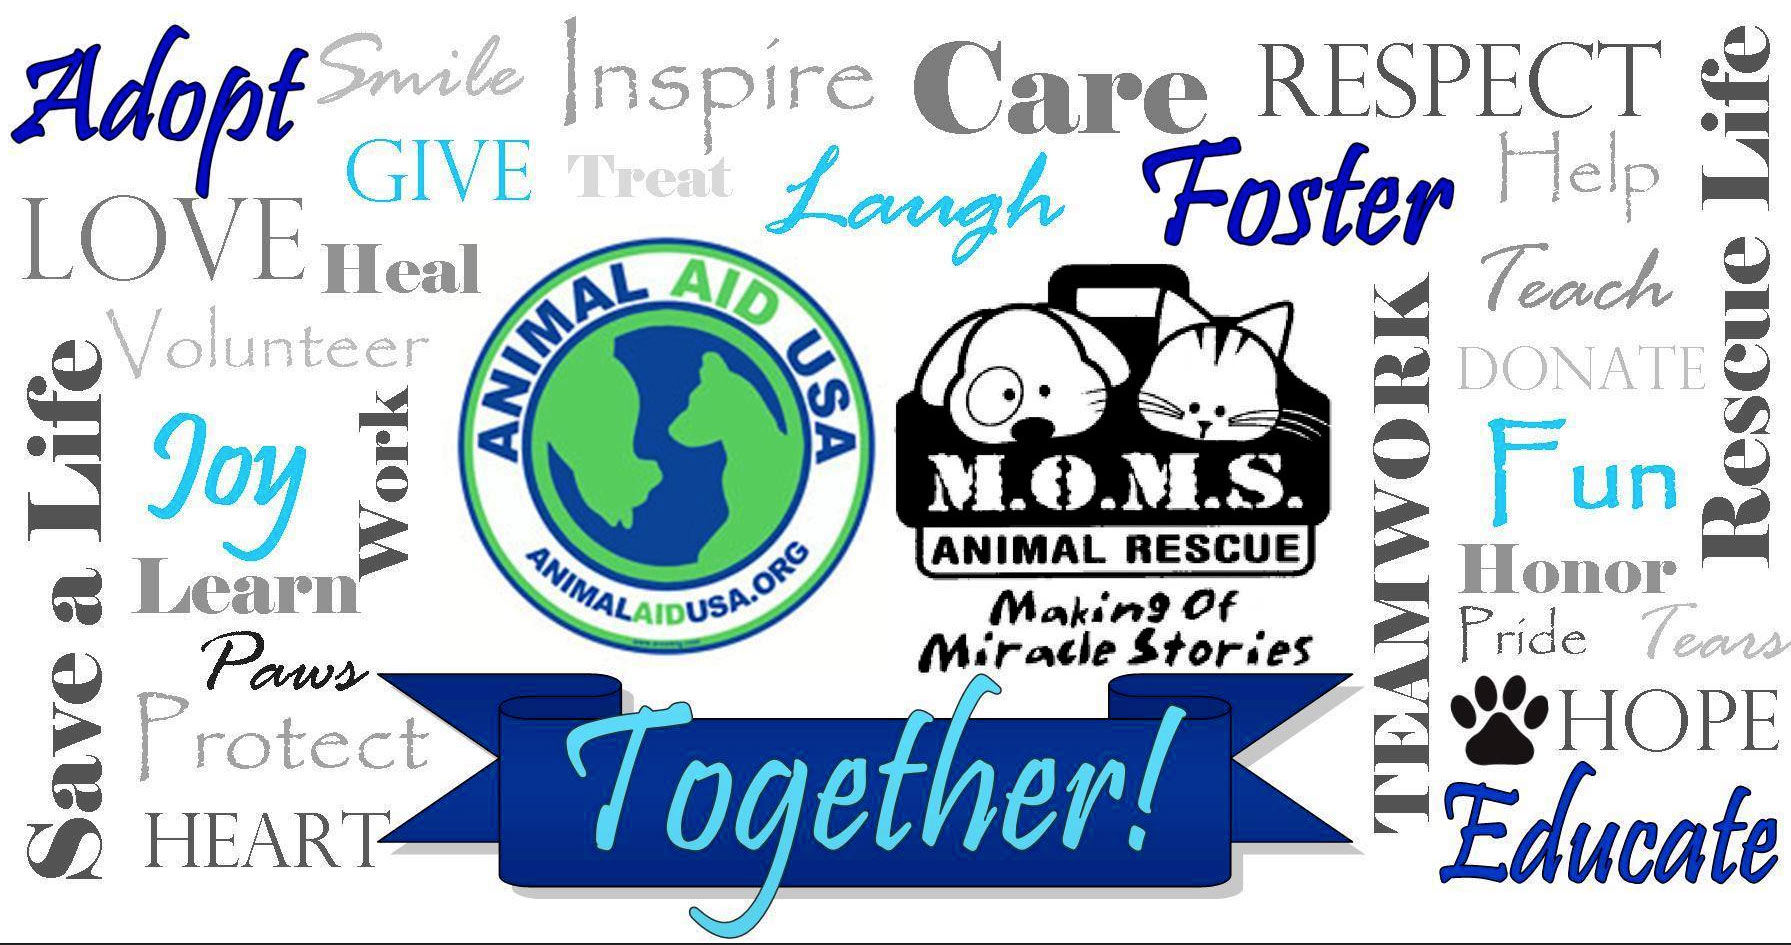 MOMS Partner With Animal Aid USA